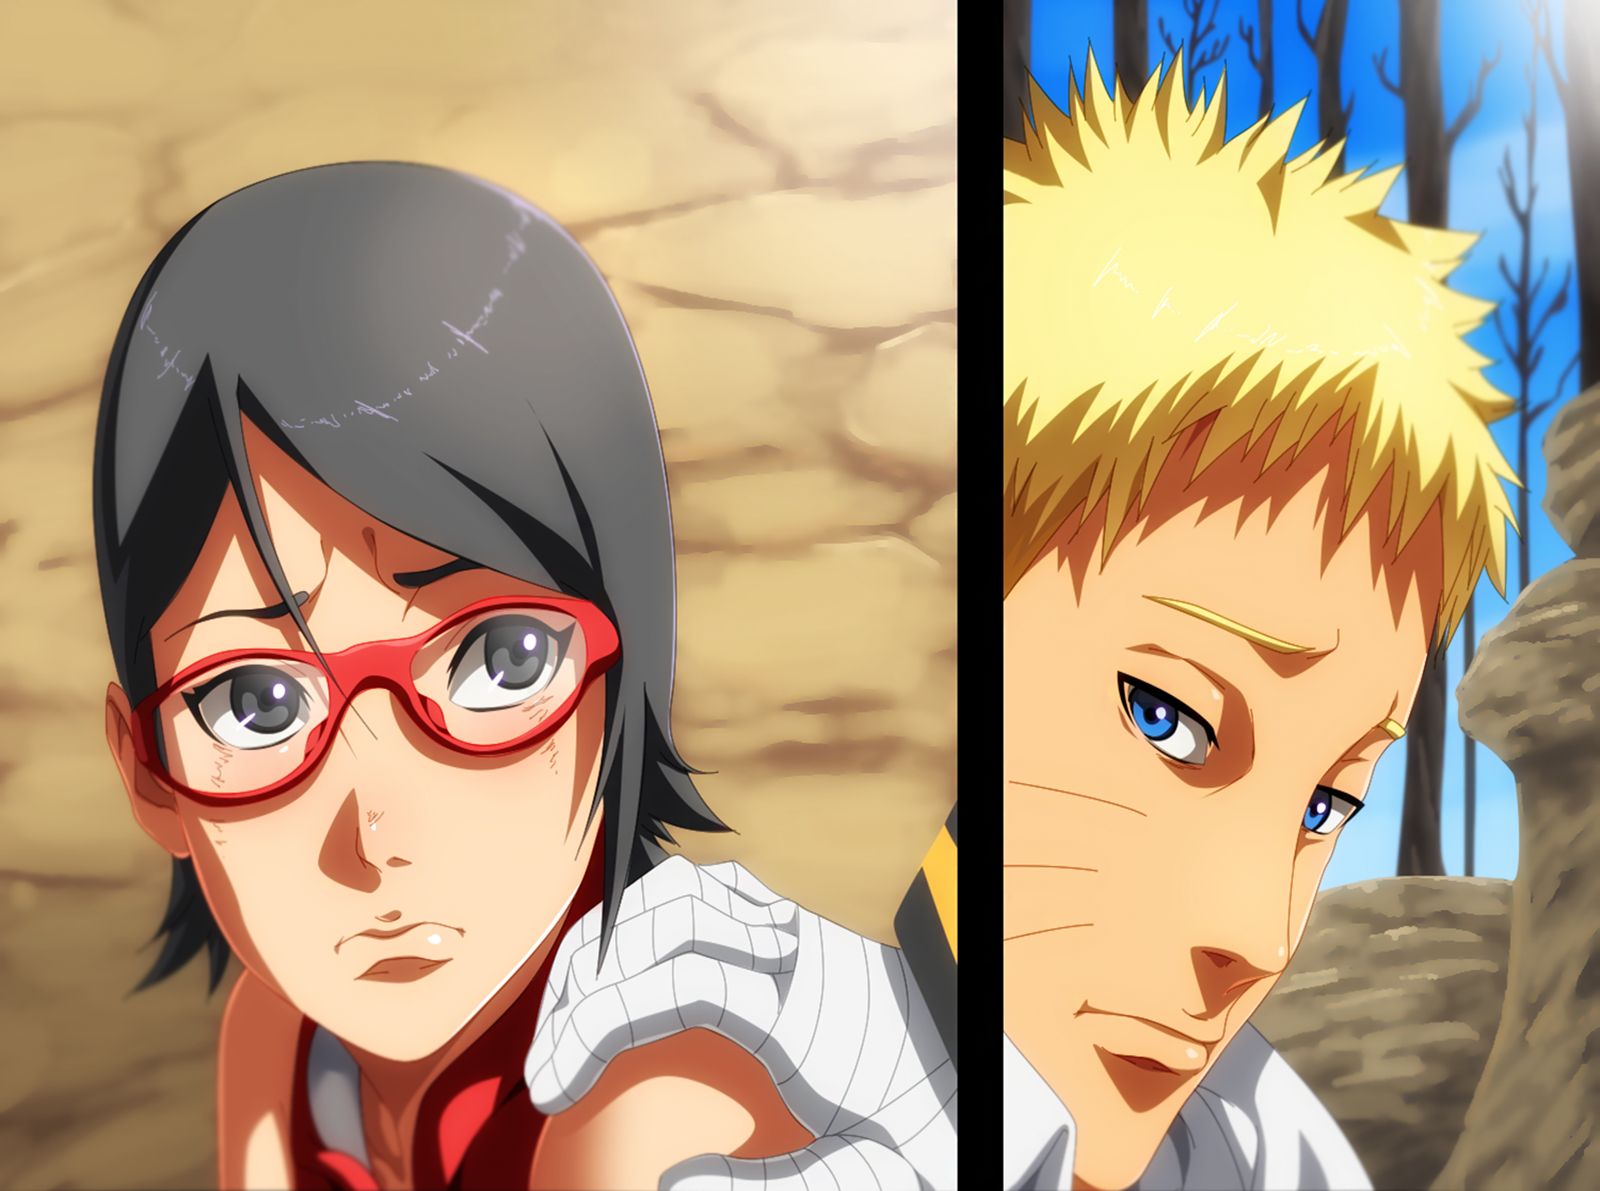 Téléchargez gratuitement l'image Naruto, Animé, Naruto Uzumaki, Boruto : Naruto Le Film, Sarada Uchiwa sur le bureau de votre PC